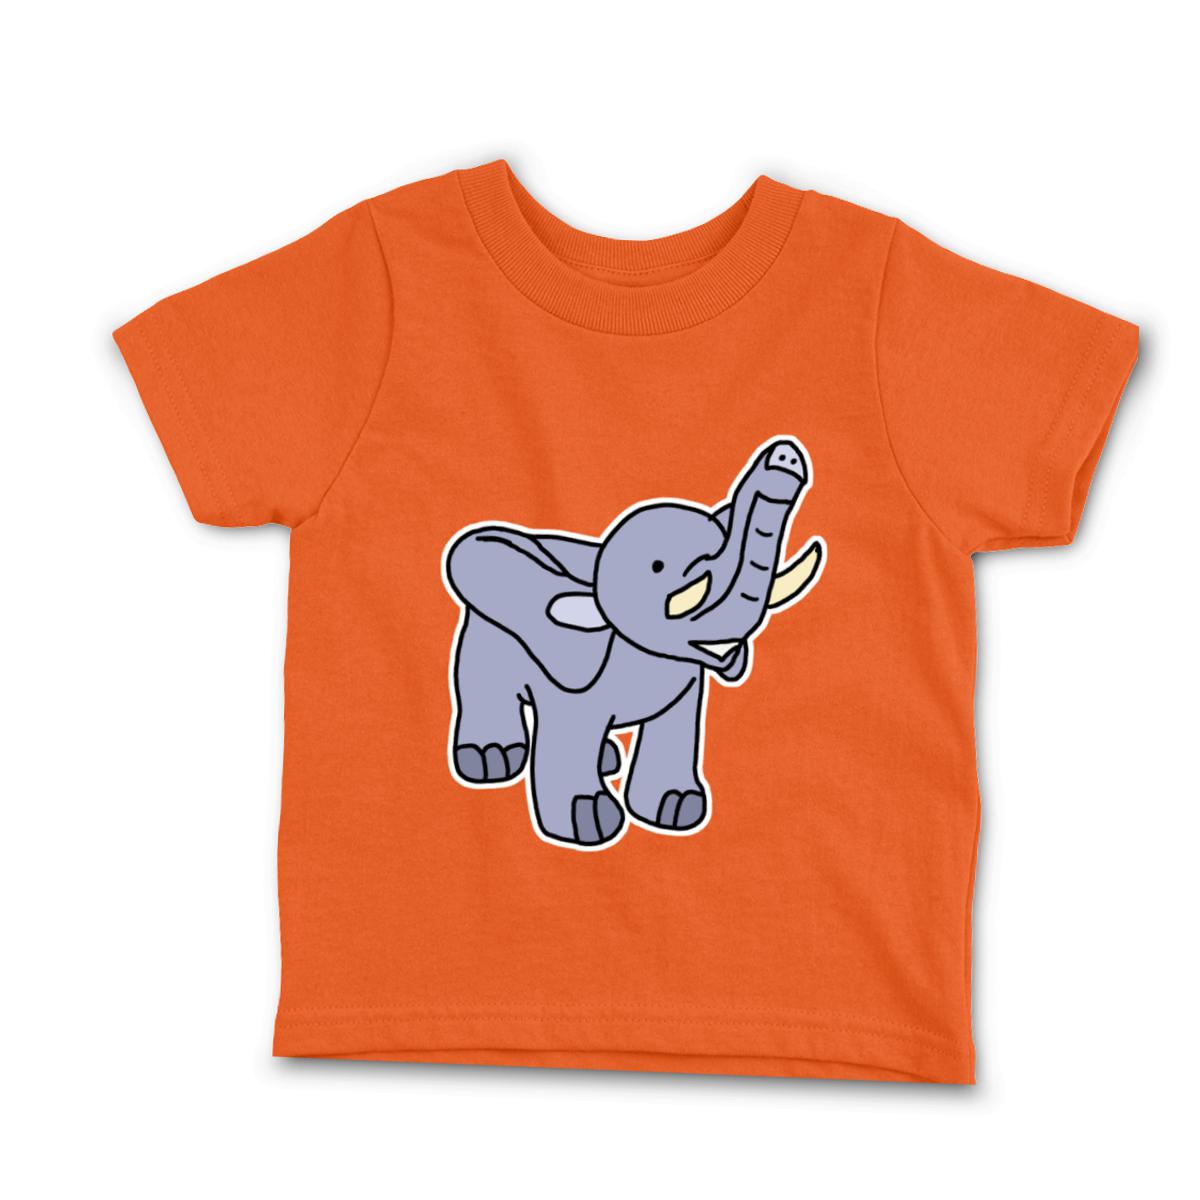 Toy Elephant Toddler Tee 56T orange